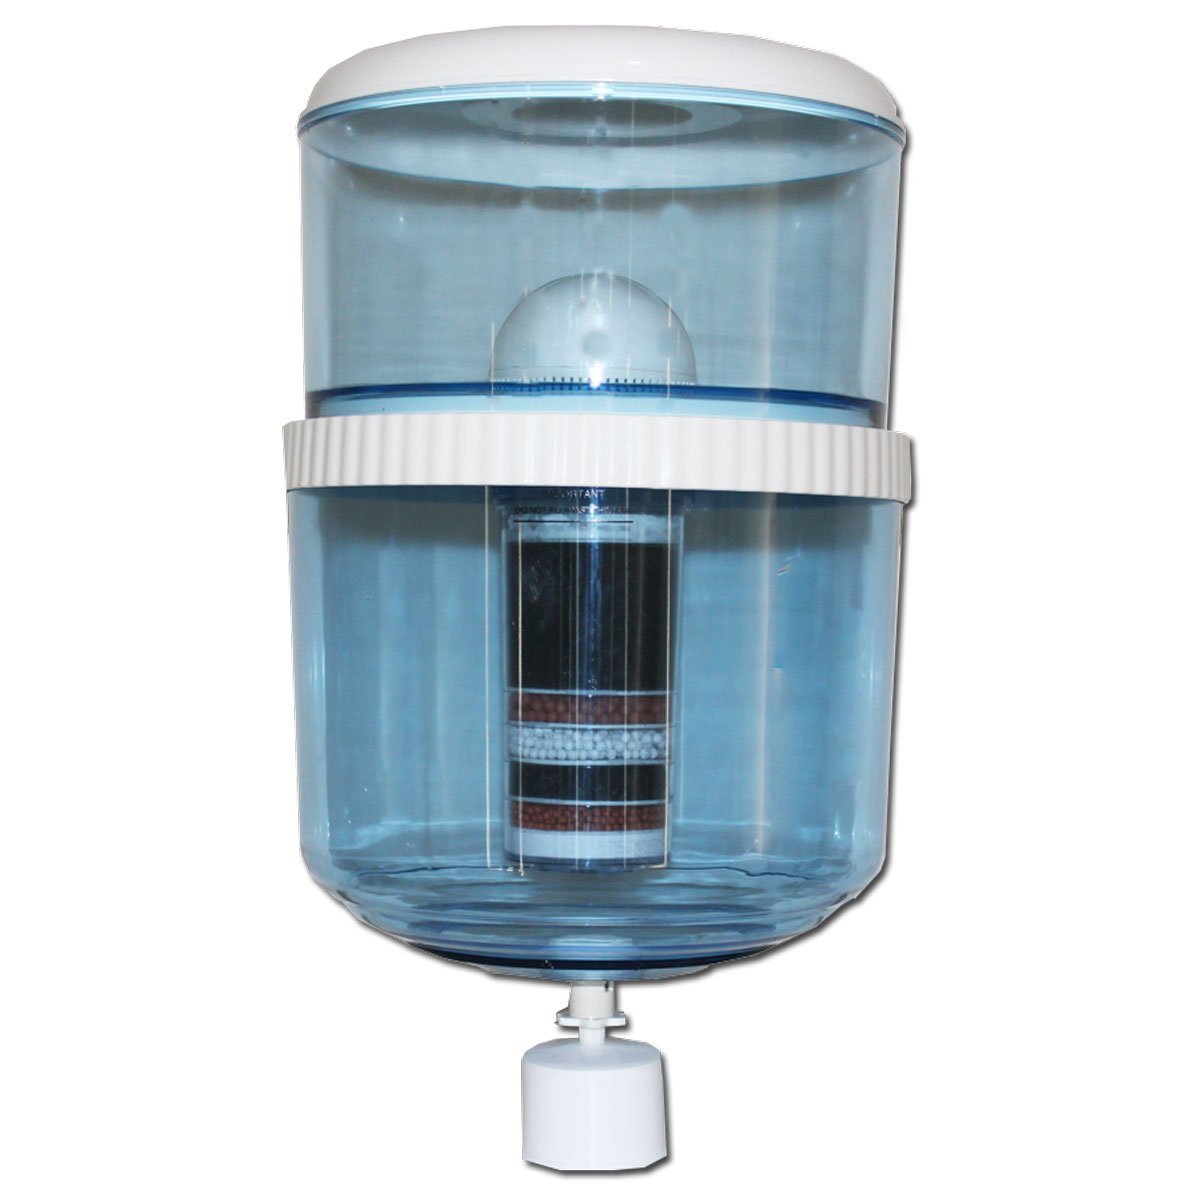 Aimex 8 Stage Water Filter Replacement Cartridge - Mari Australia